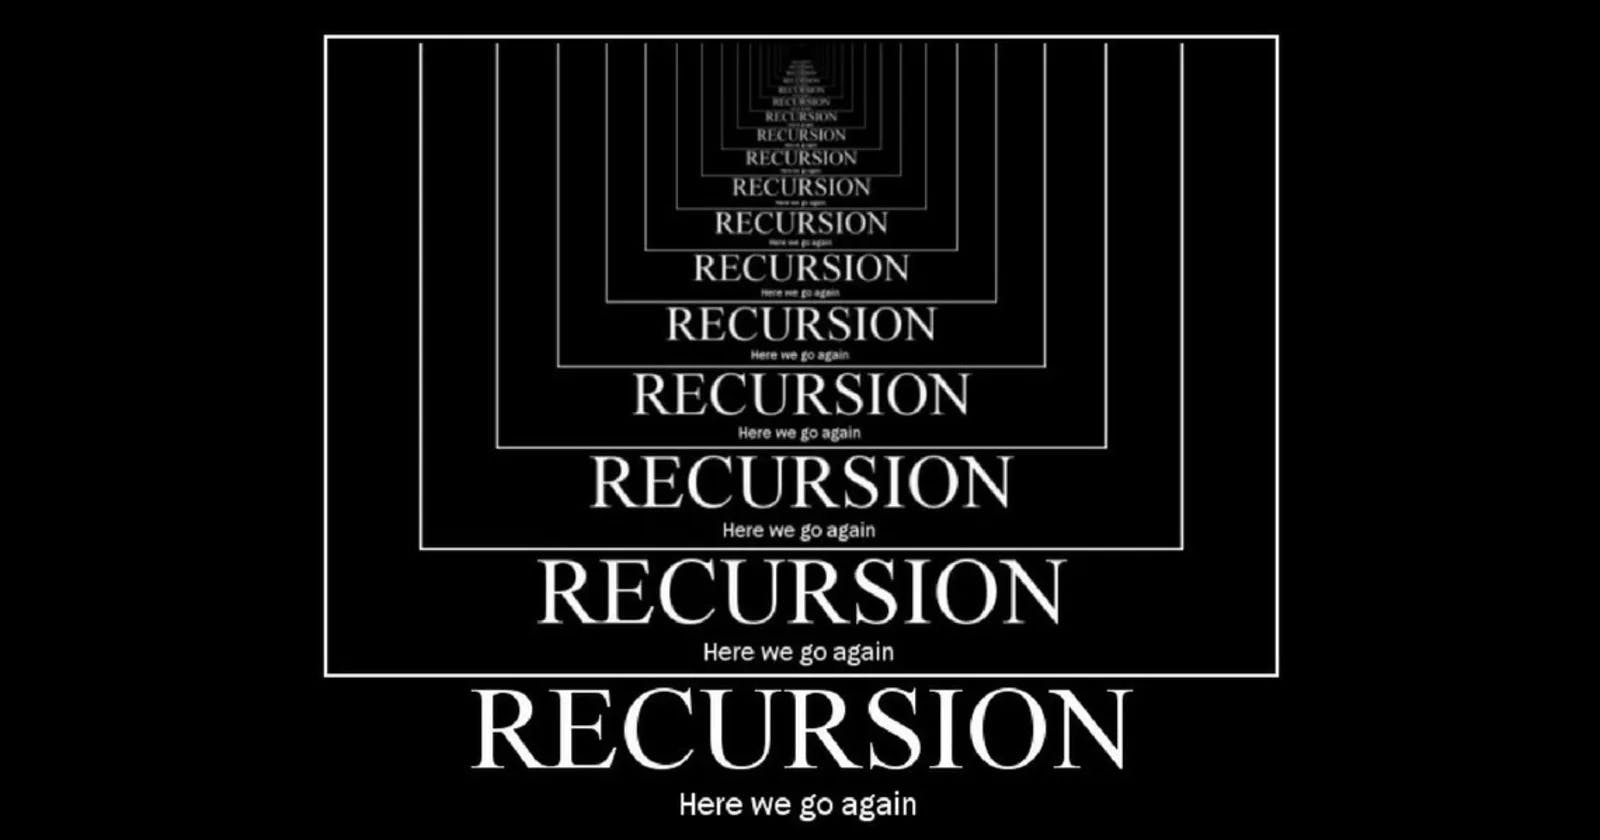 The basics of recursion in C